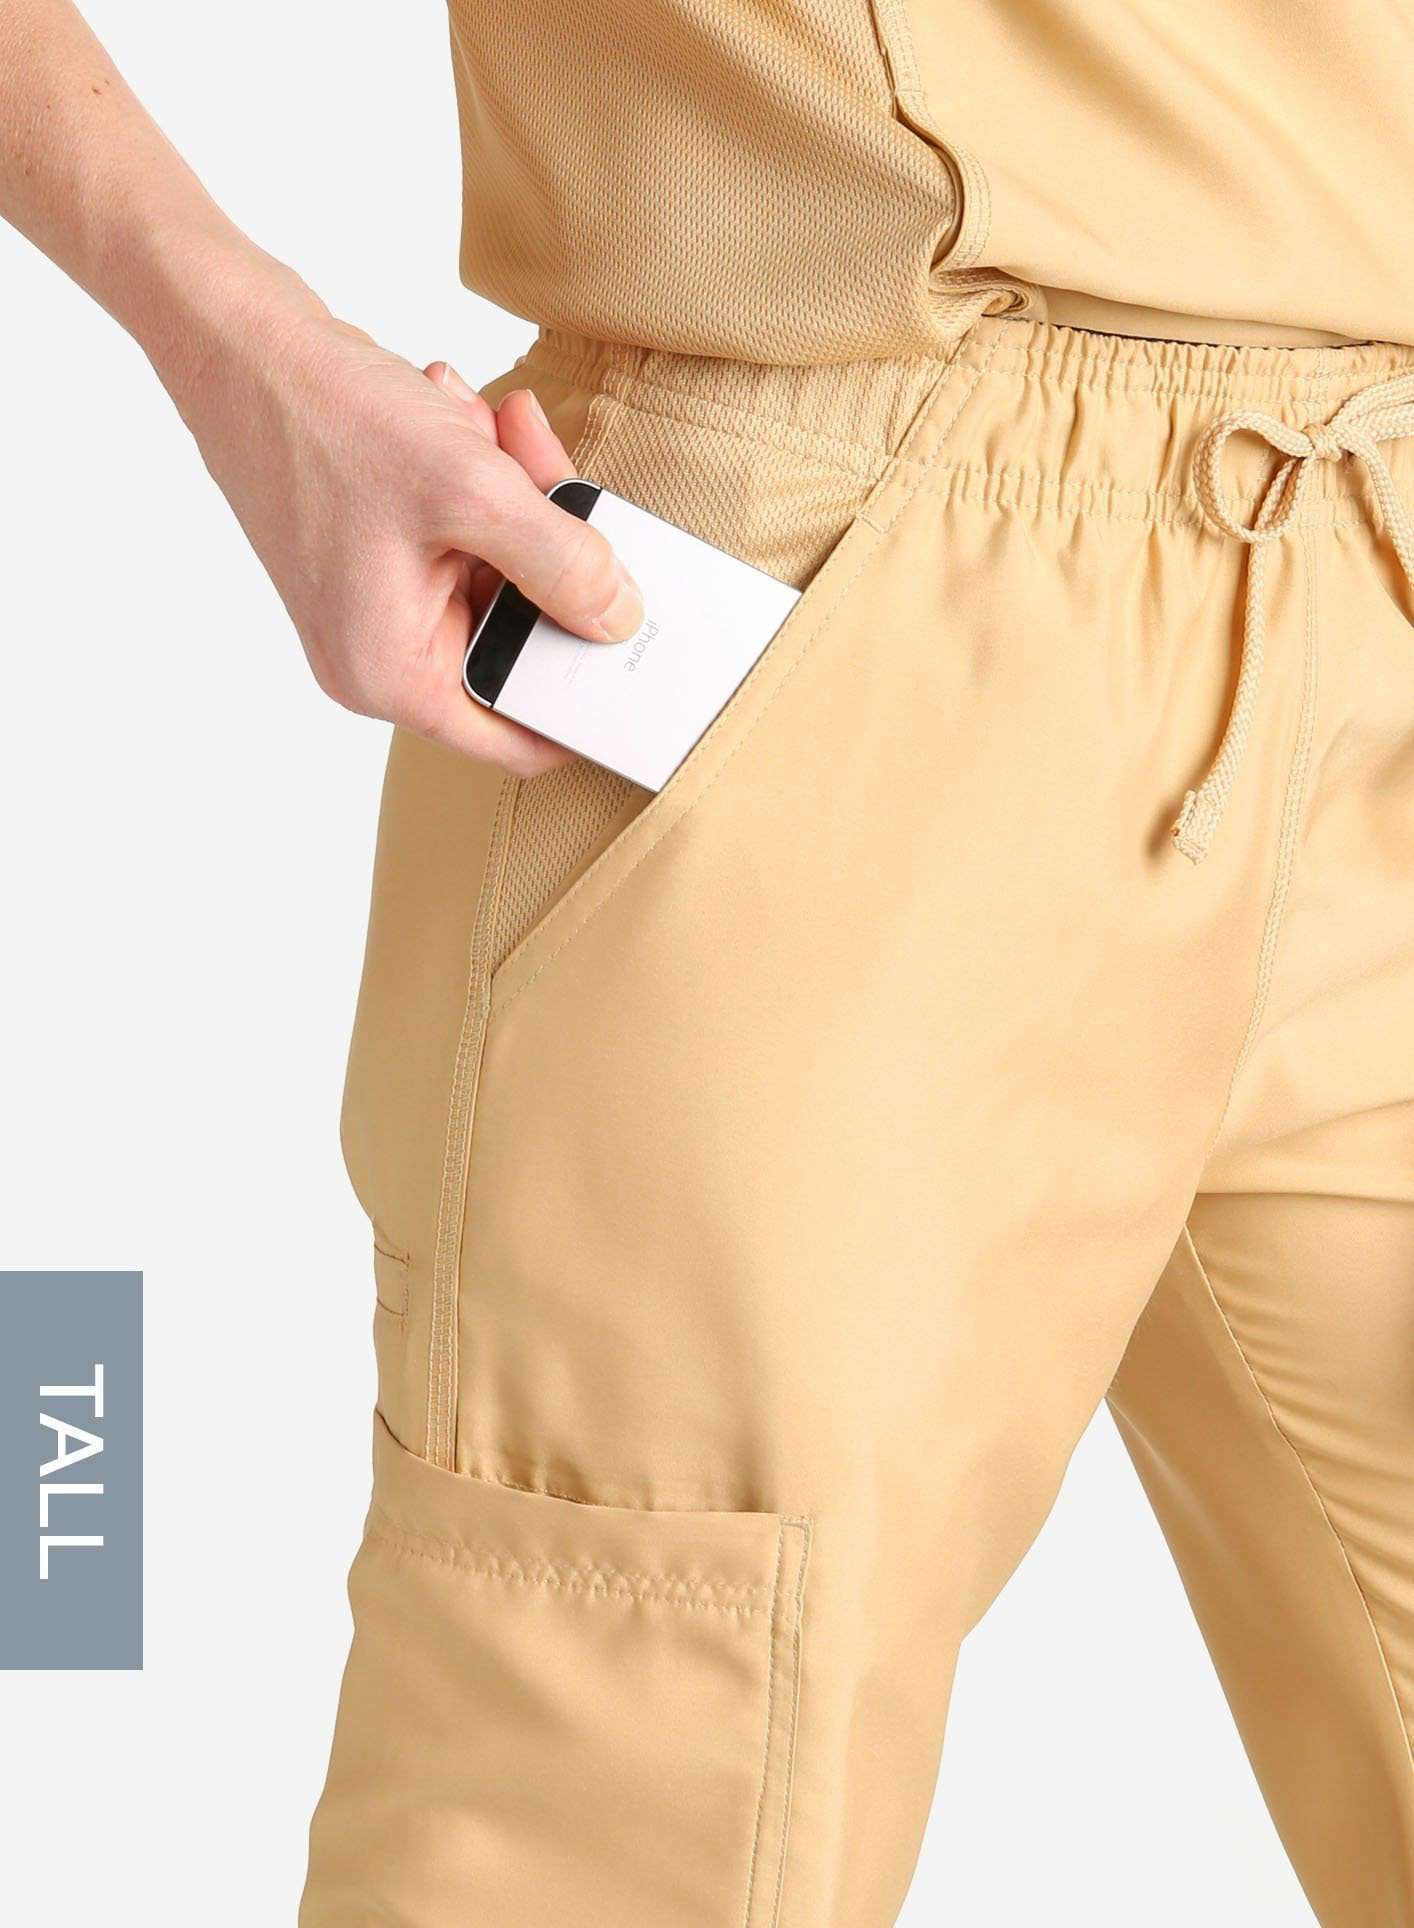 Women's Mid Rise Tailored Straight Pant | Women's Bottoms | Abercrombie.com